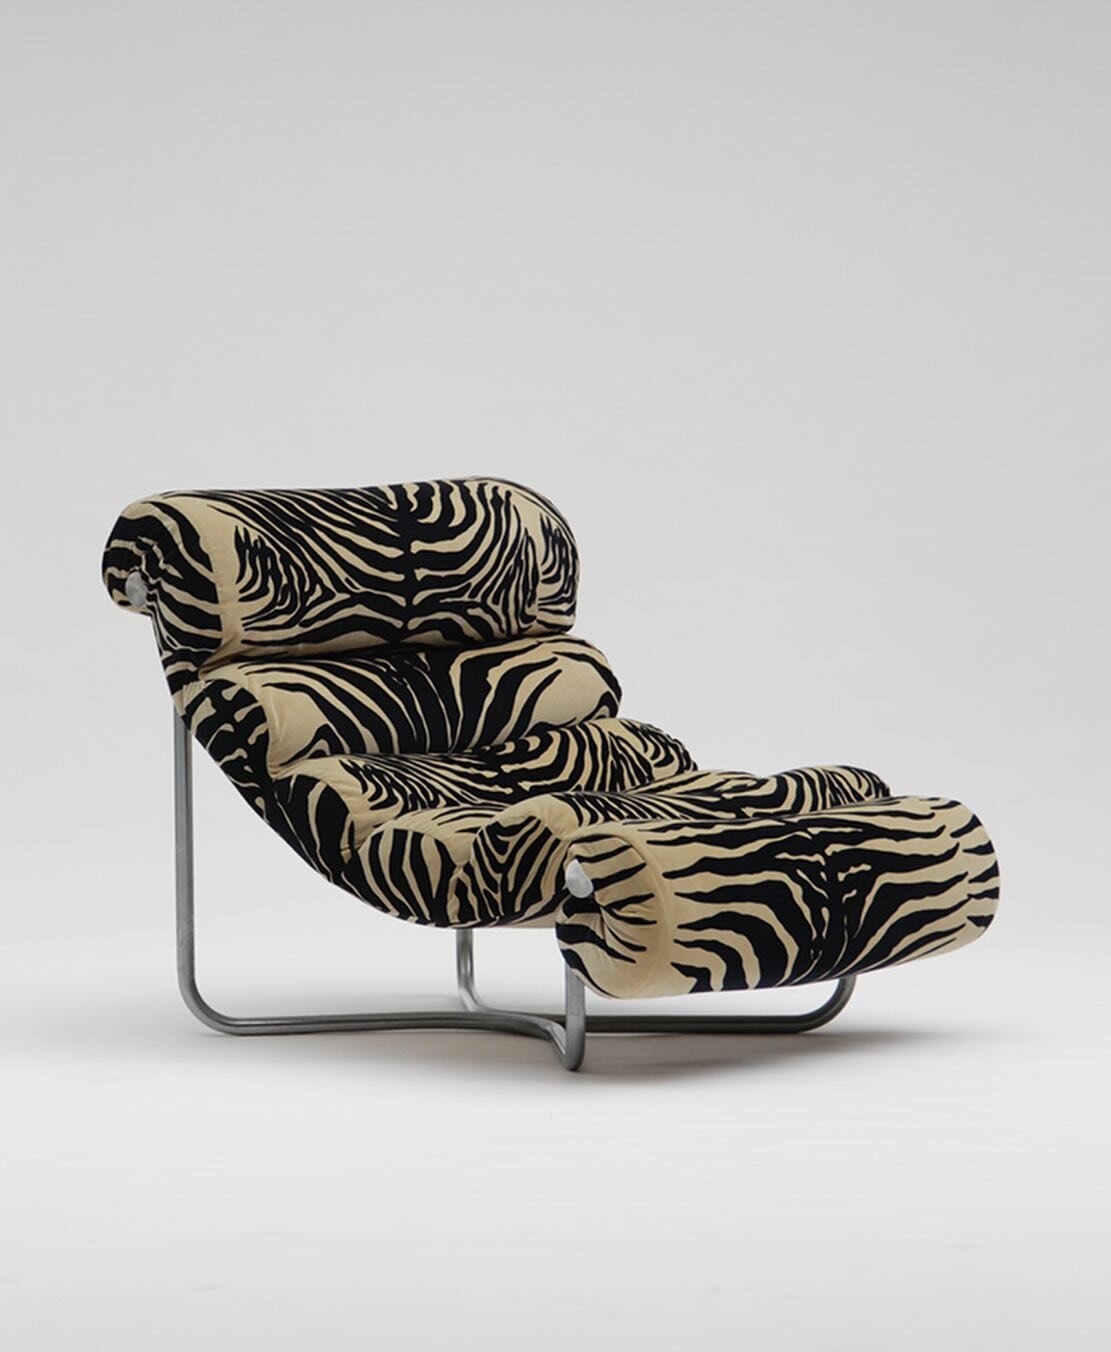 &lsquo;Glasgow&rsquo; lounge chair by Georges van Rijck, Belgium, 1972 🦓 

via @city_furniture_ 💡🖤